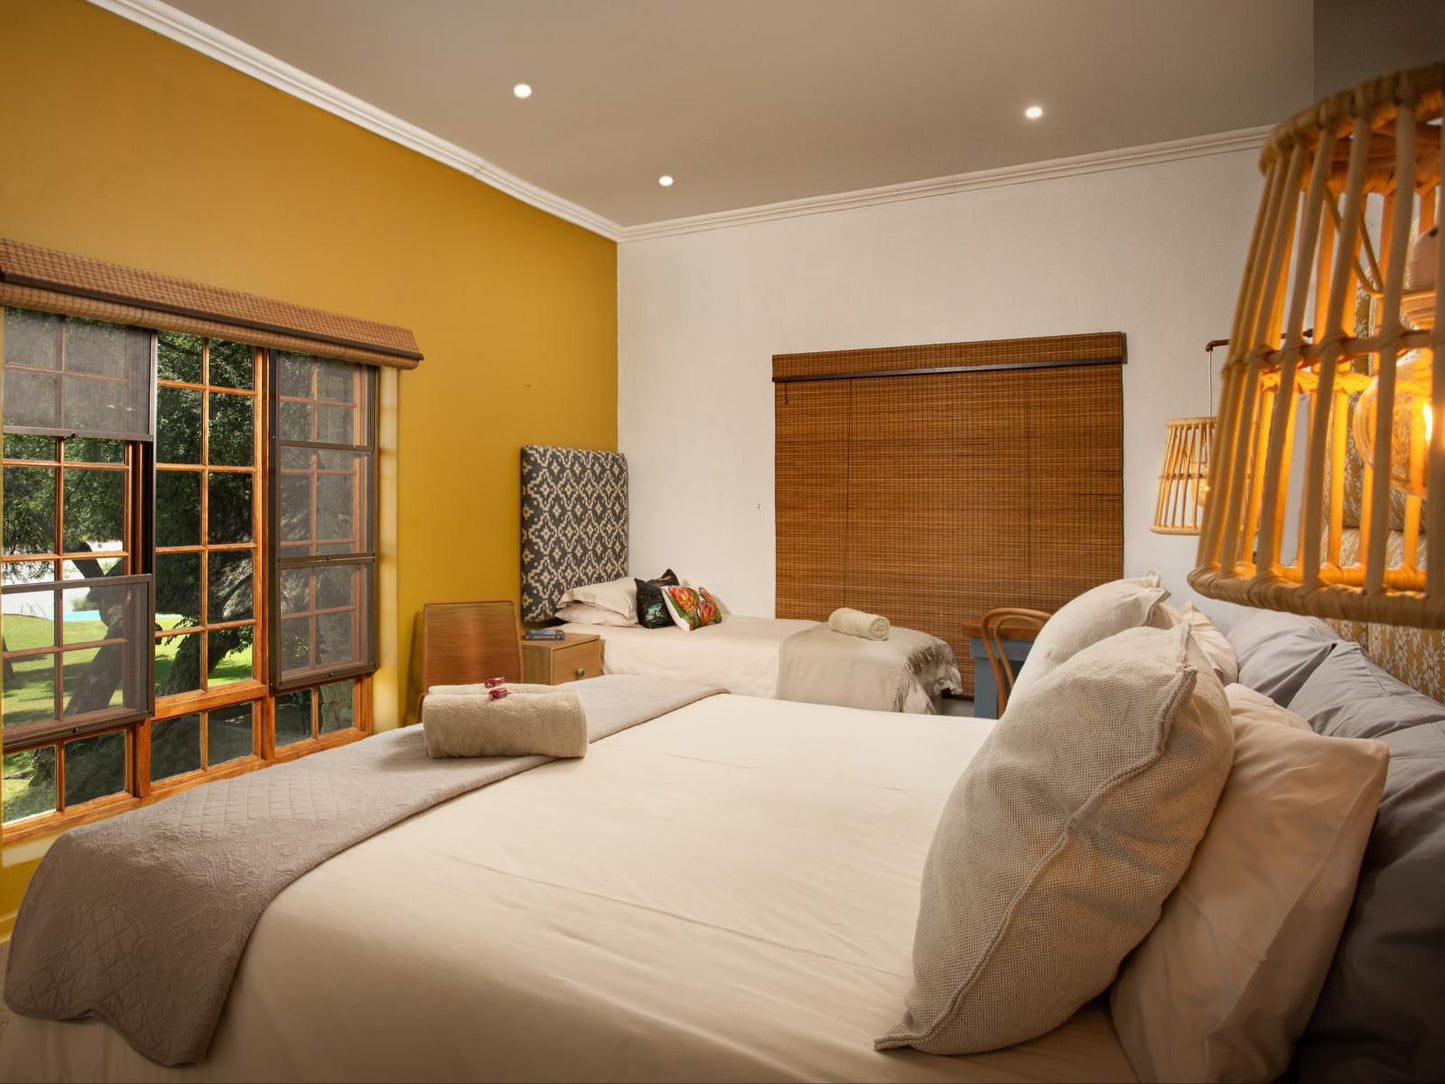 Tzamenkomst River Lodge Colesberg Northern Cape South Africa Sepia Tones, Bedroom